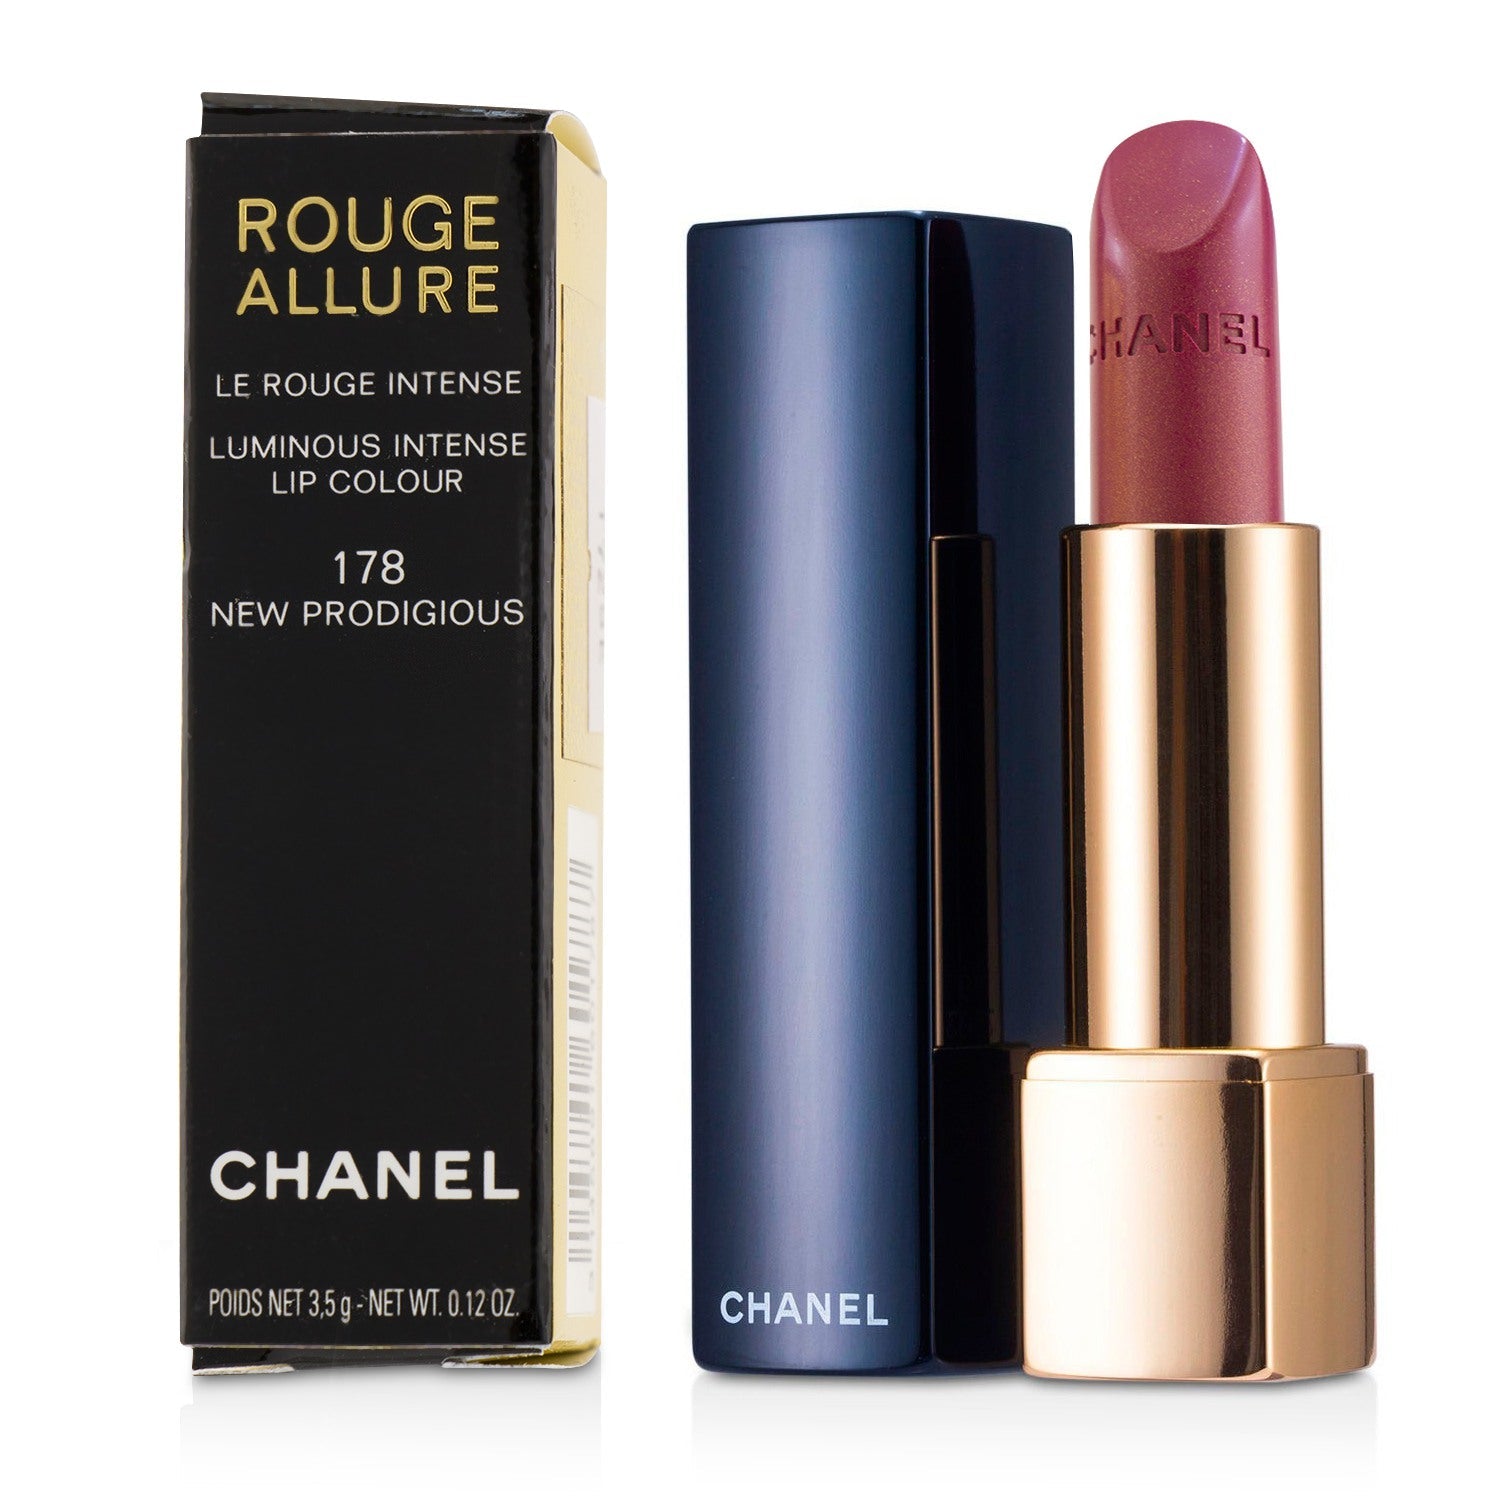 Chanel Rouge Allure Luminous Intense Lip Colour No. 152 Insaisissable for  Women, 0.12 Ounce : Beauty & Personal Care 